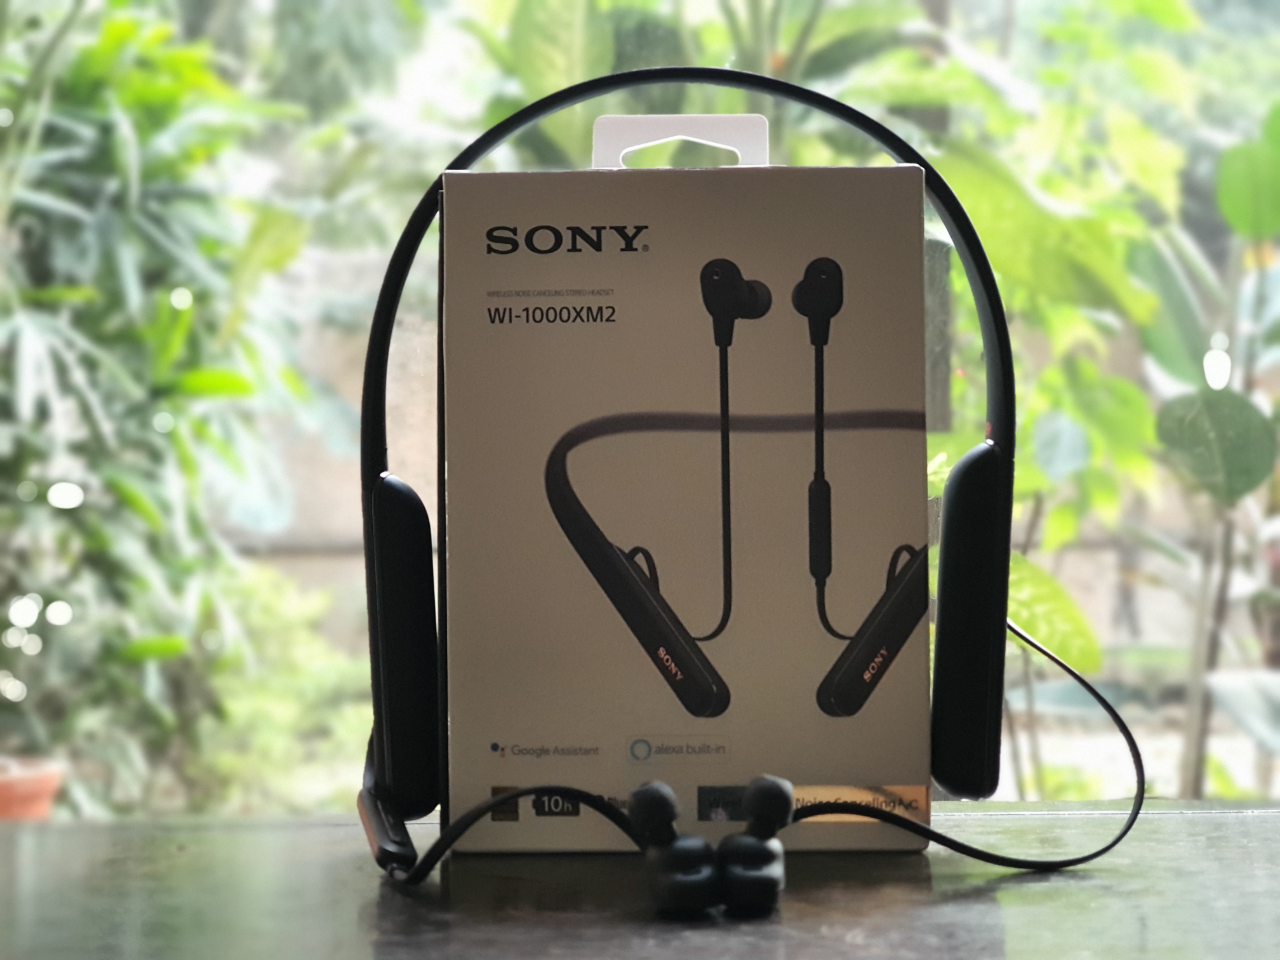 In a world of truly wireless earphones, will Sony's WI-1000XM2